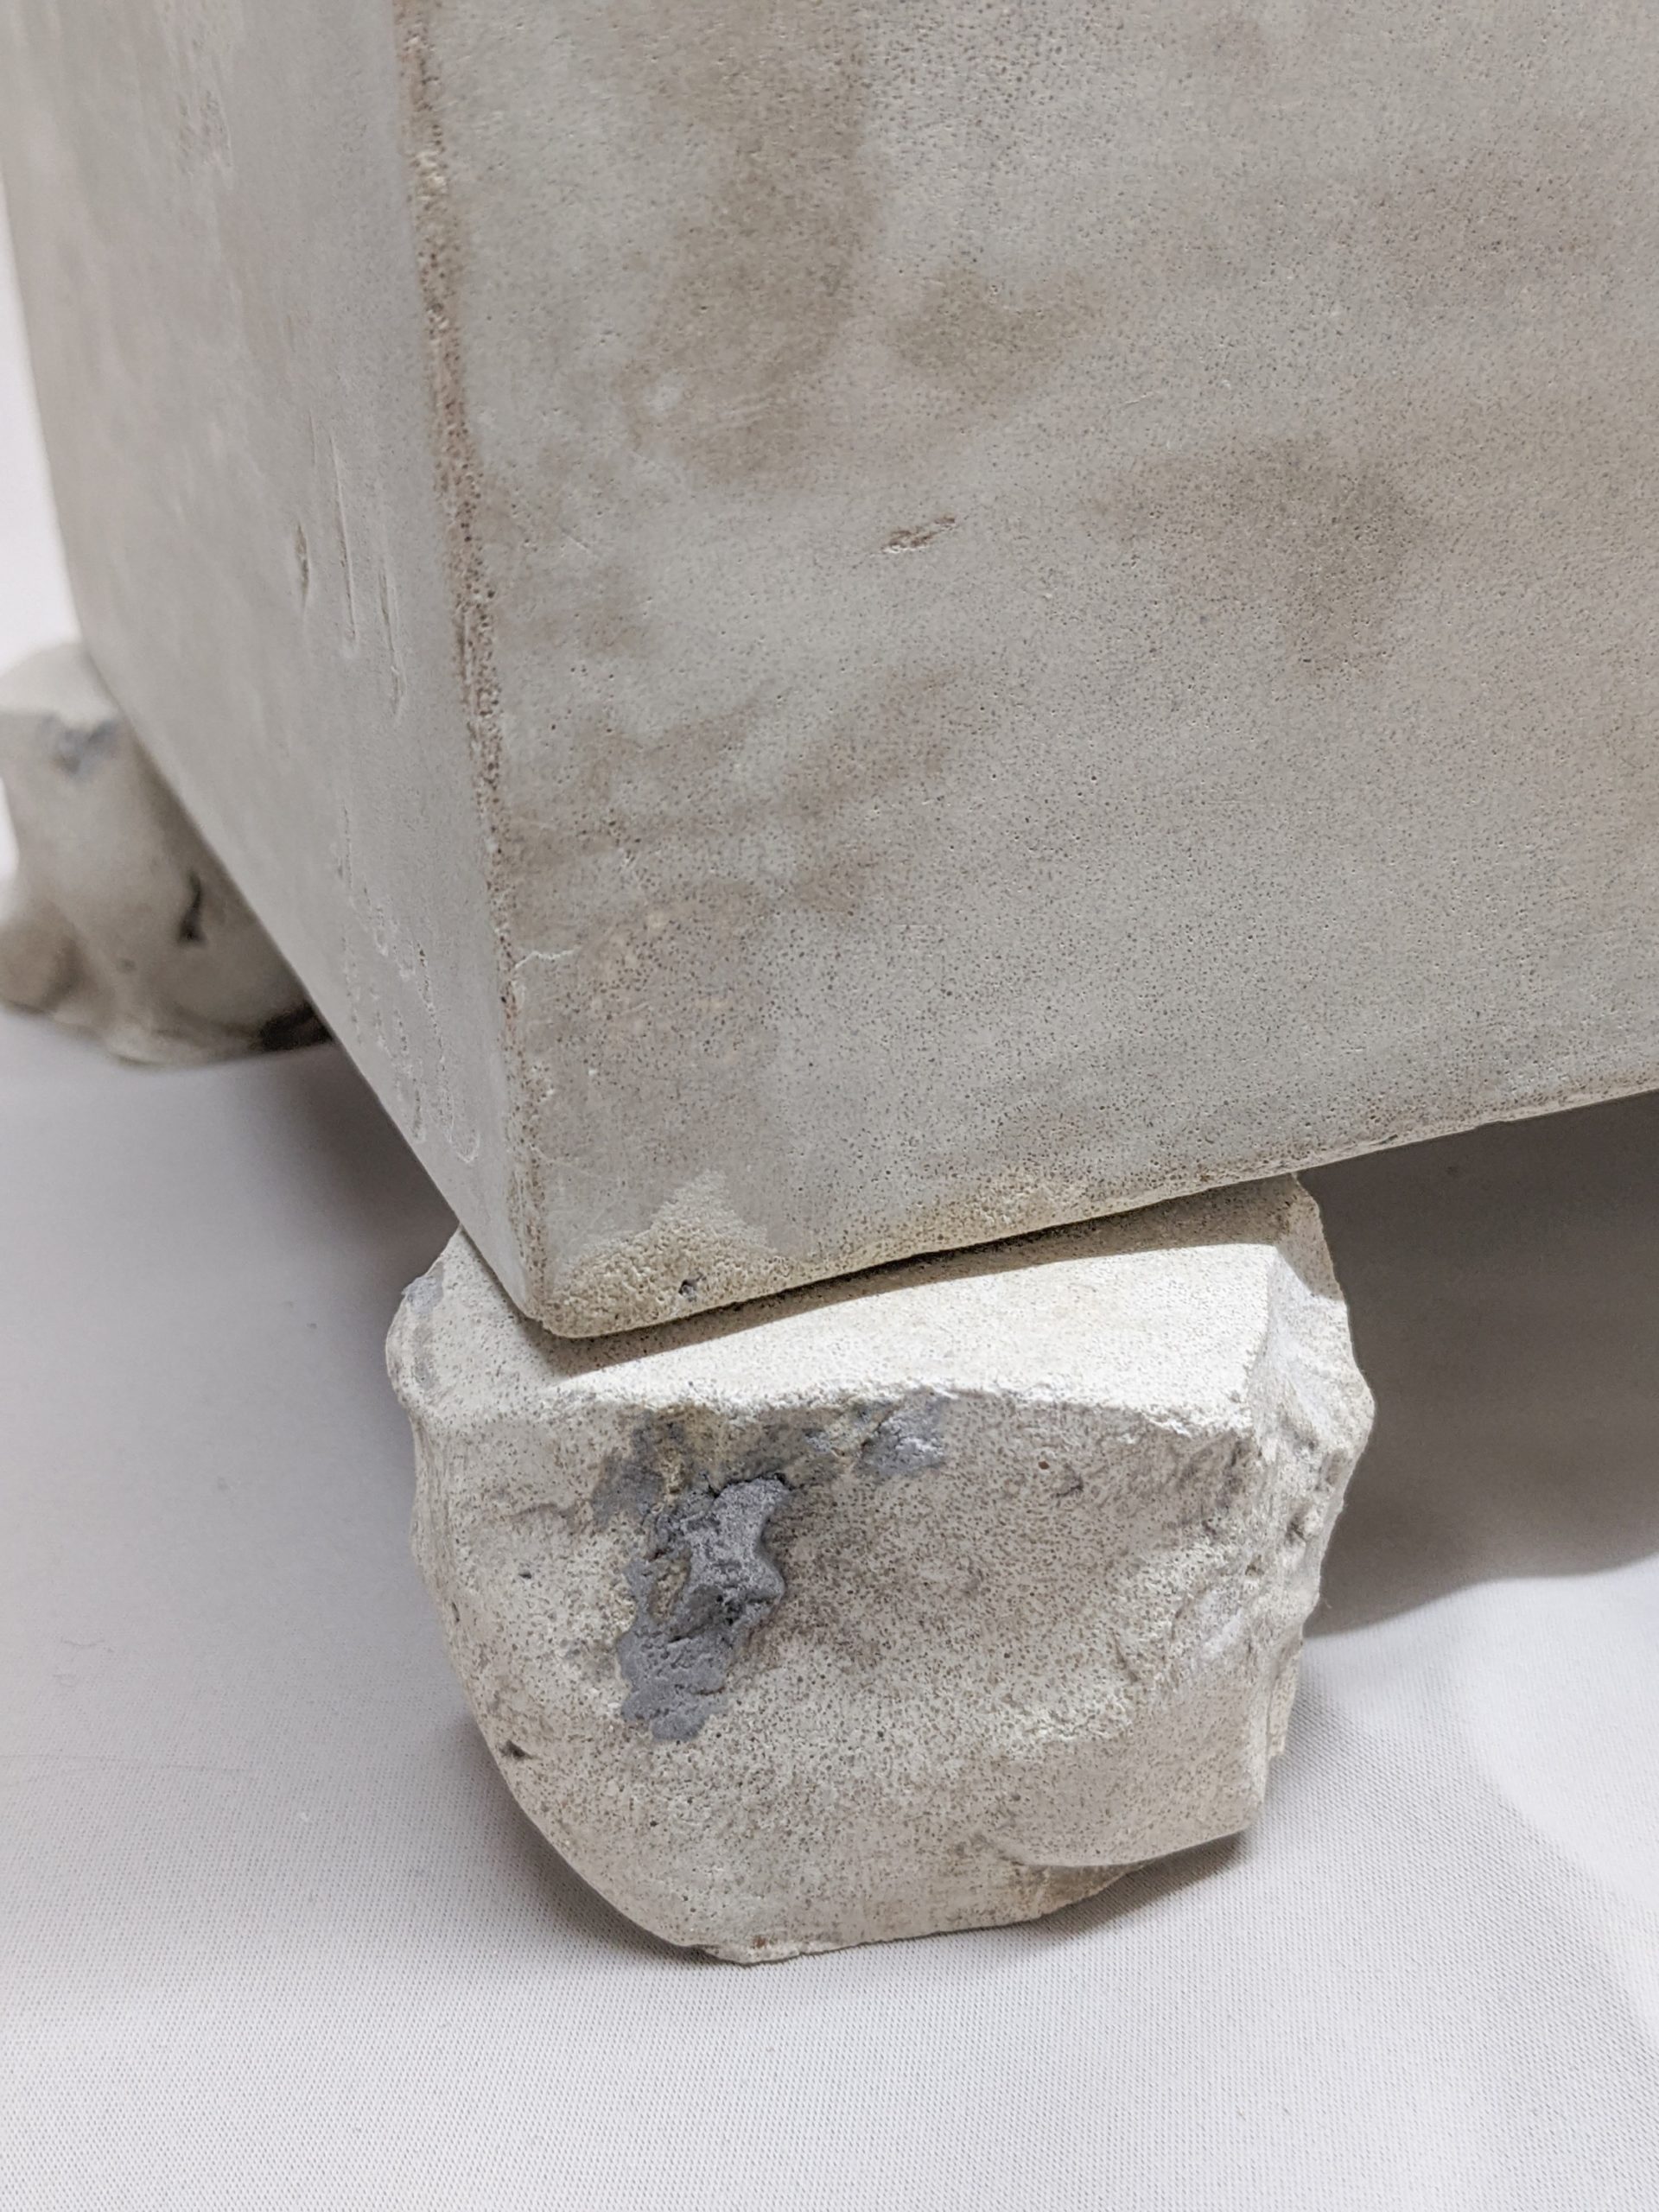 Portland Stone & Aluminium Pigments, 30 x 22 x 16 cm, 2022.